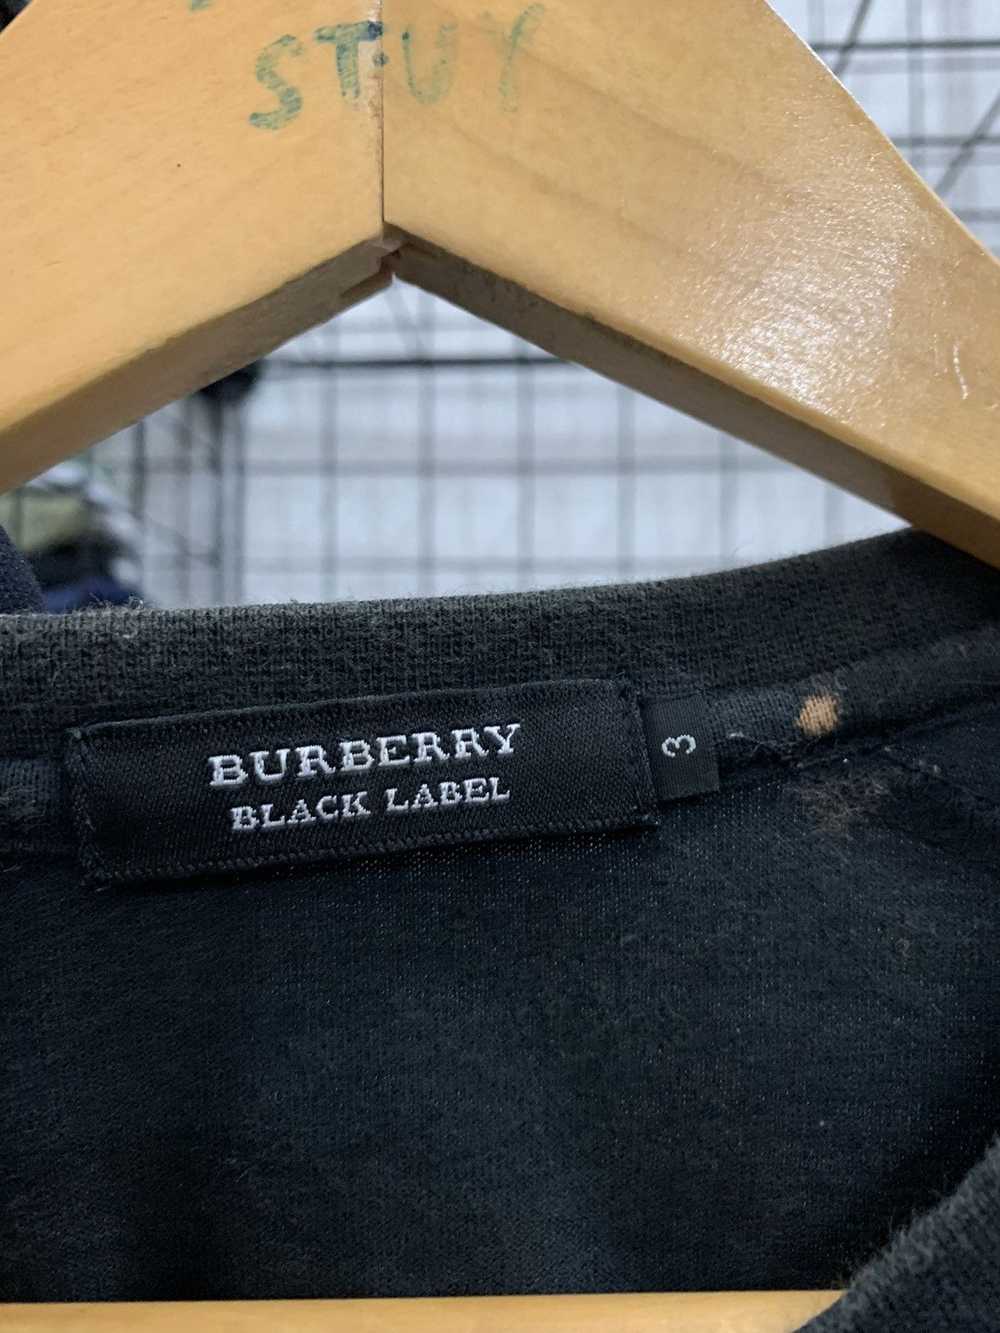 Burberry BURBERRY BLACK LABEL MEN’S T-SHIRT - image 5